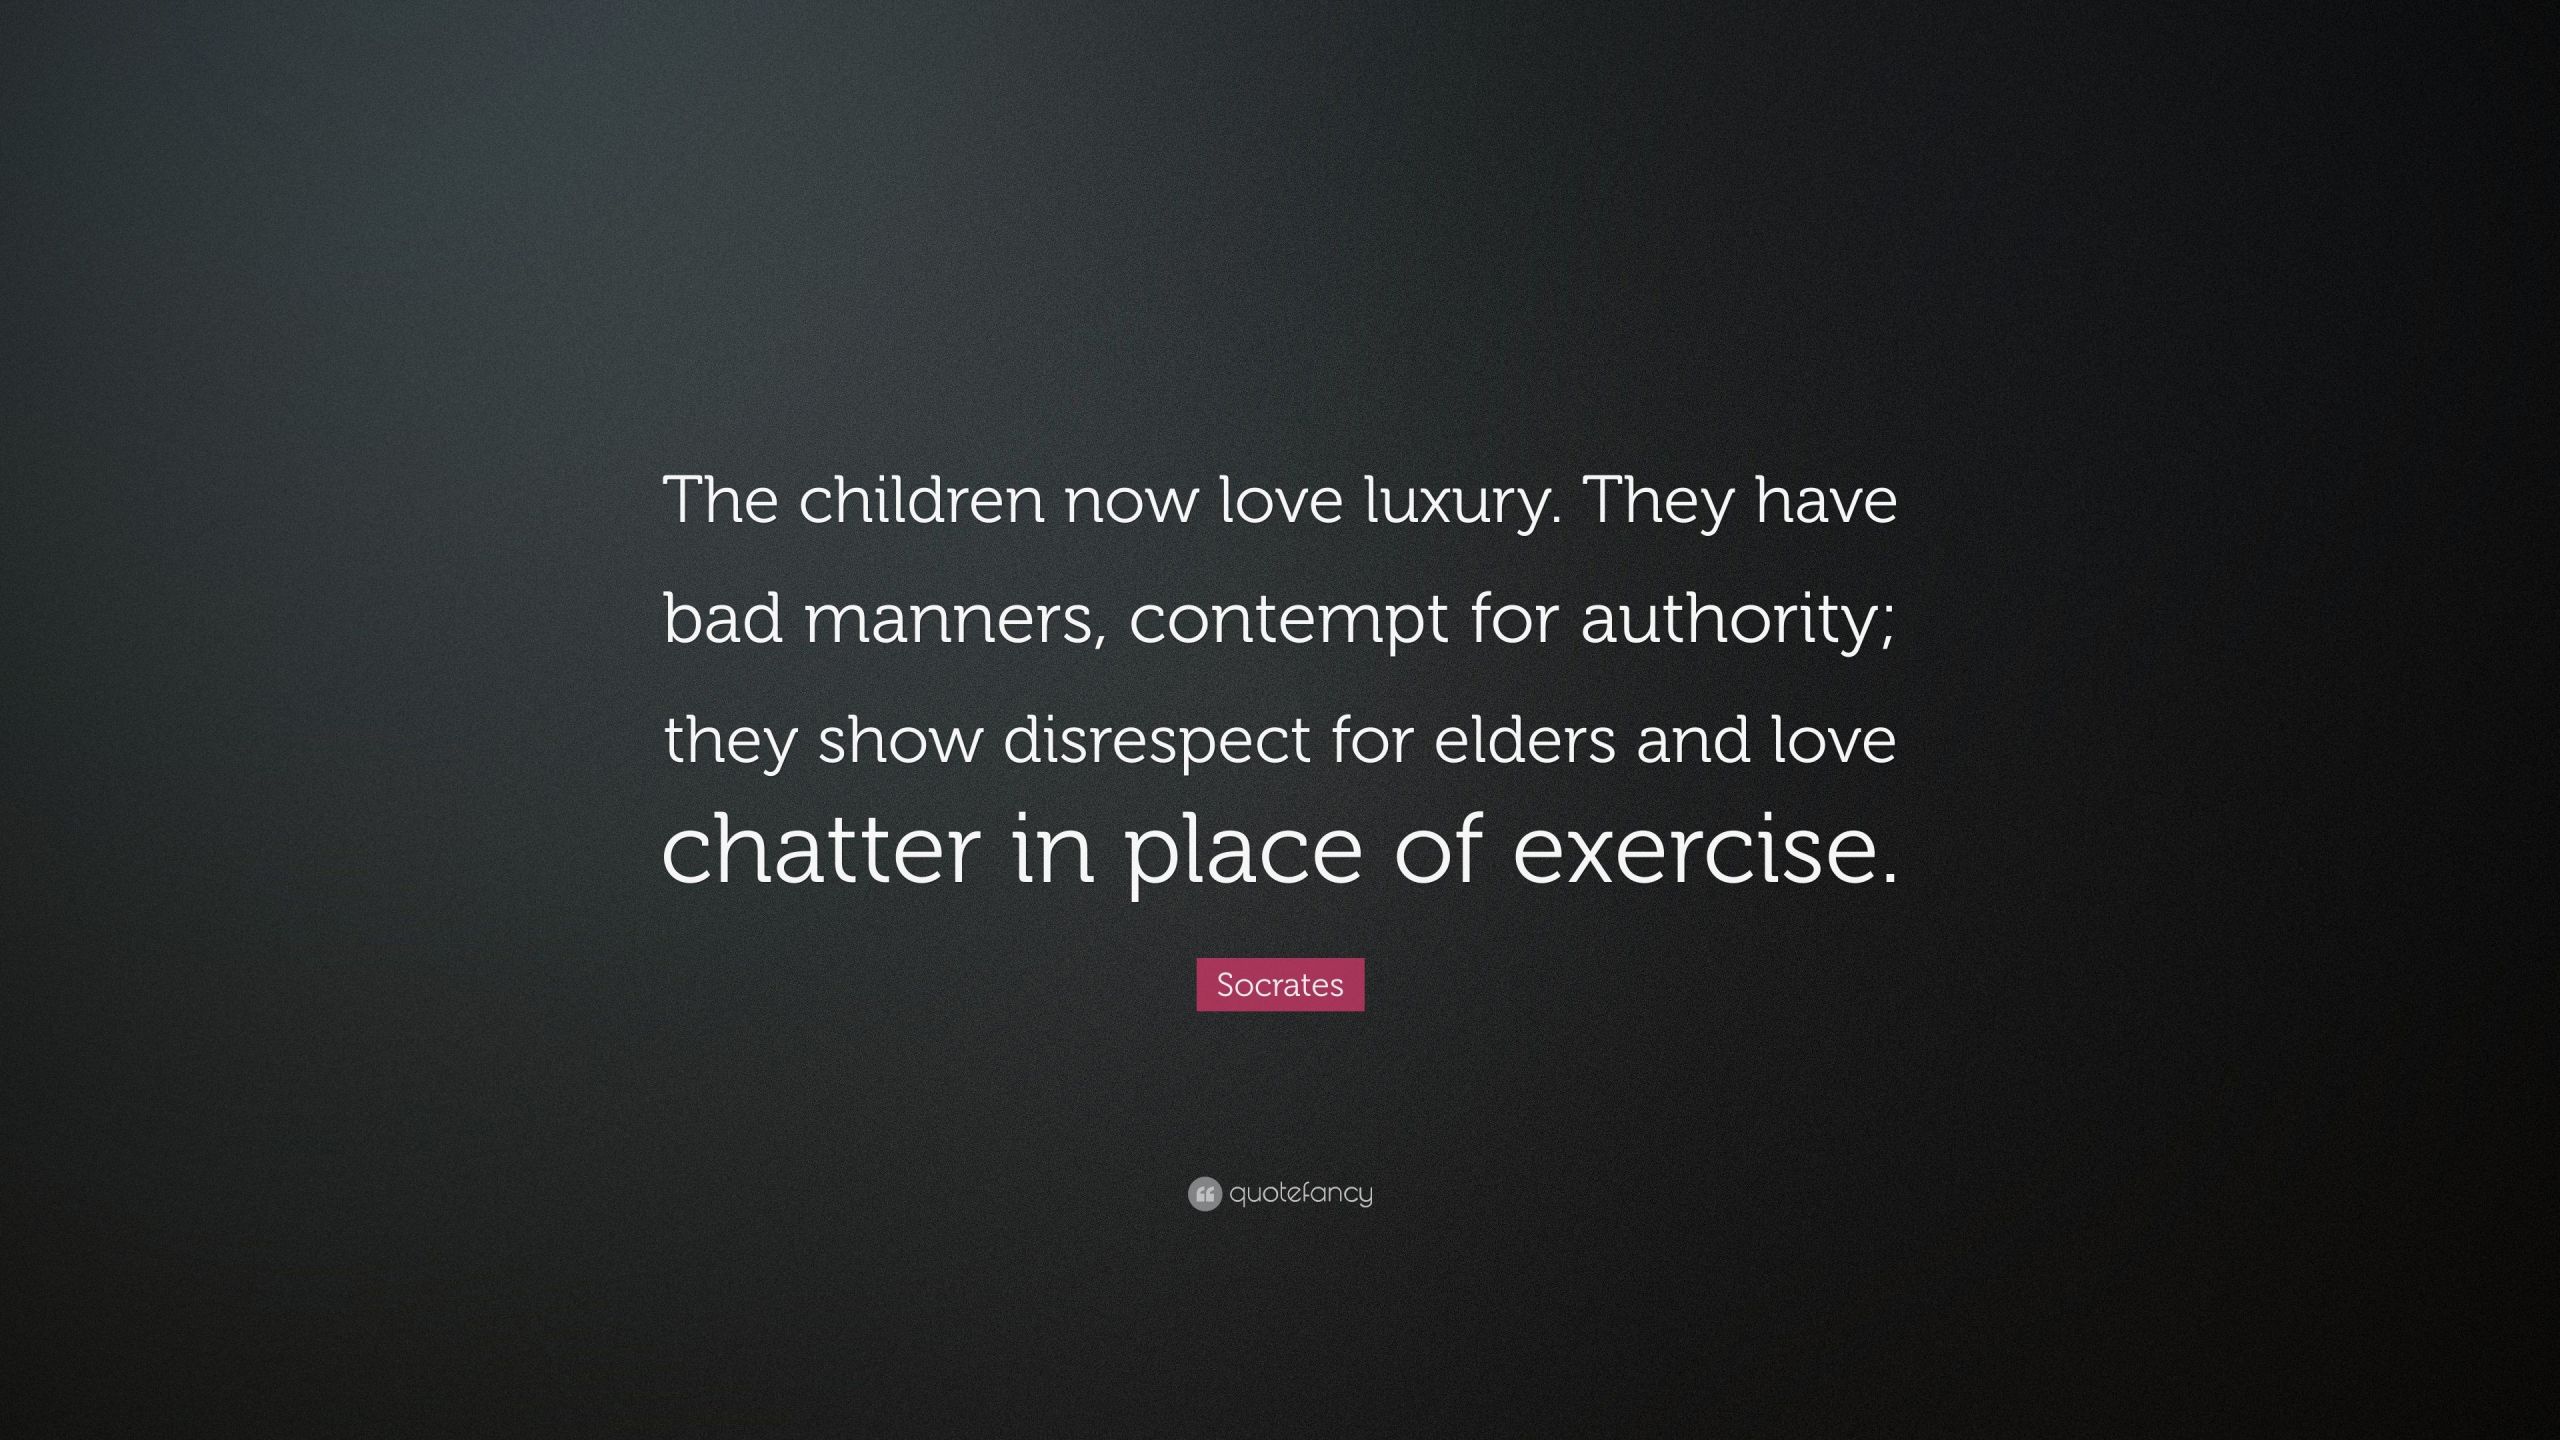 Socrates Children Quote
 Socrates Quote “The children now love luxury They have